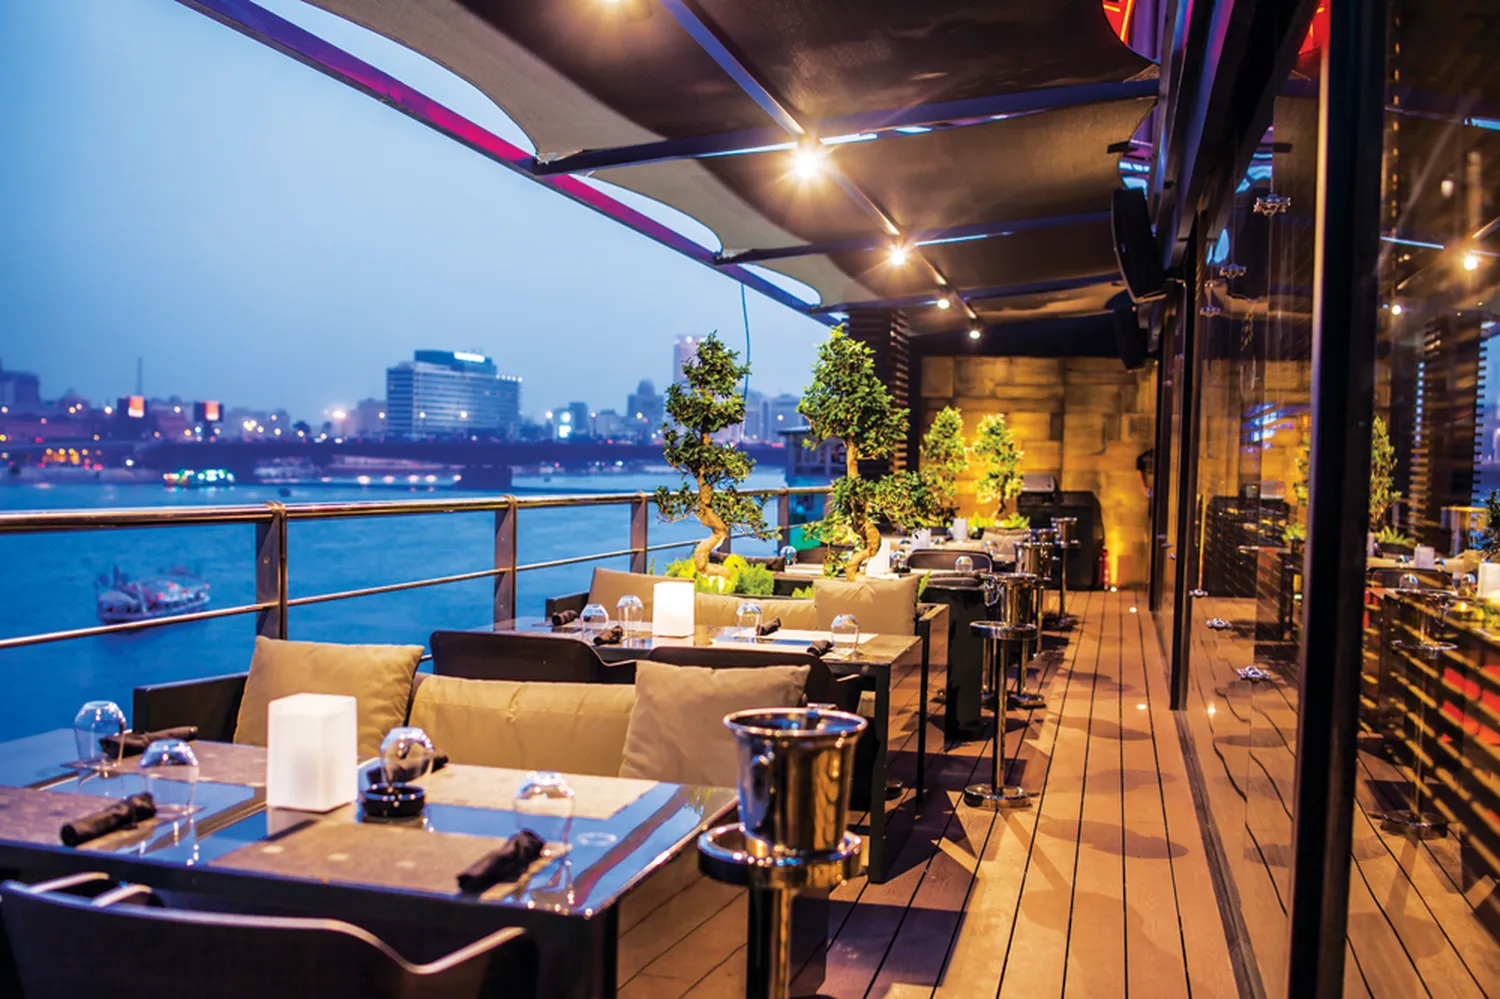 Pier88 Nile River restaurant Cairo